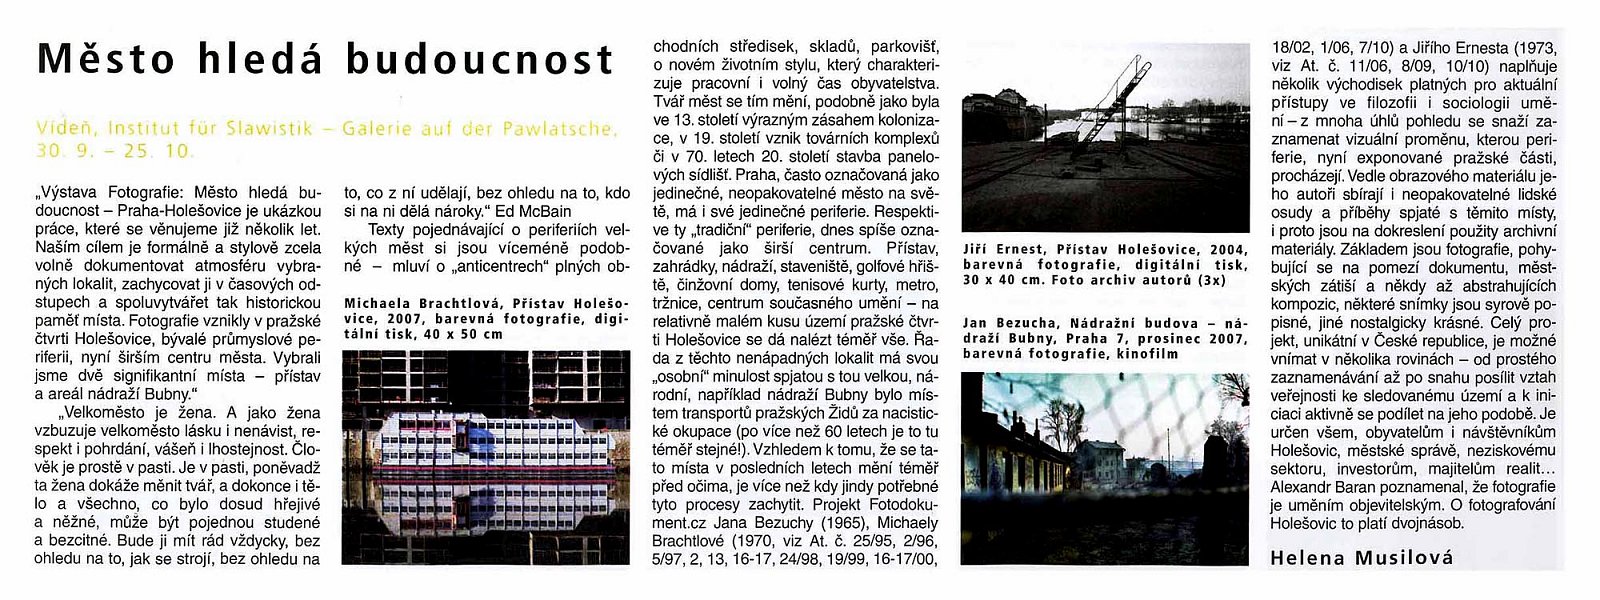 Fotodokument.cz Galerie af der Pawlatche Město hledá budoucnost 2010 Wien recenze atelier